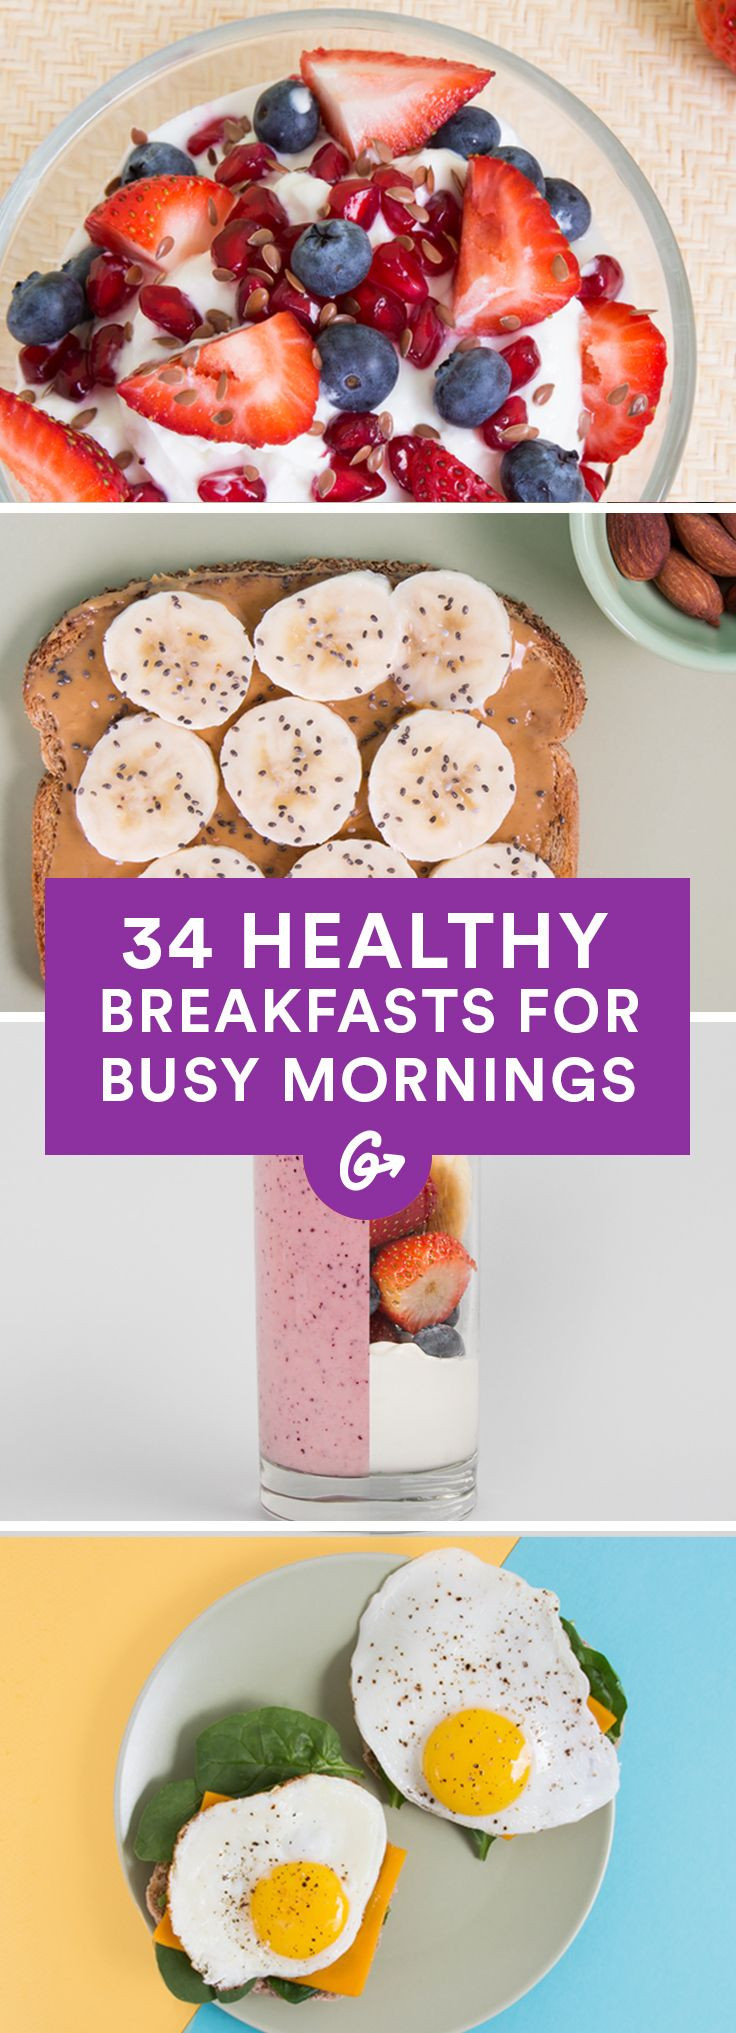 Healthy Morning Breakfast
 39 Healthy Breakfasts for Busy Mornings